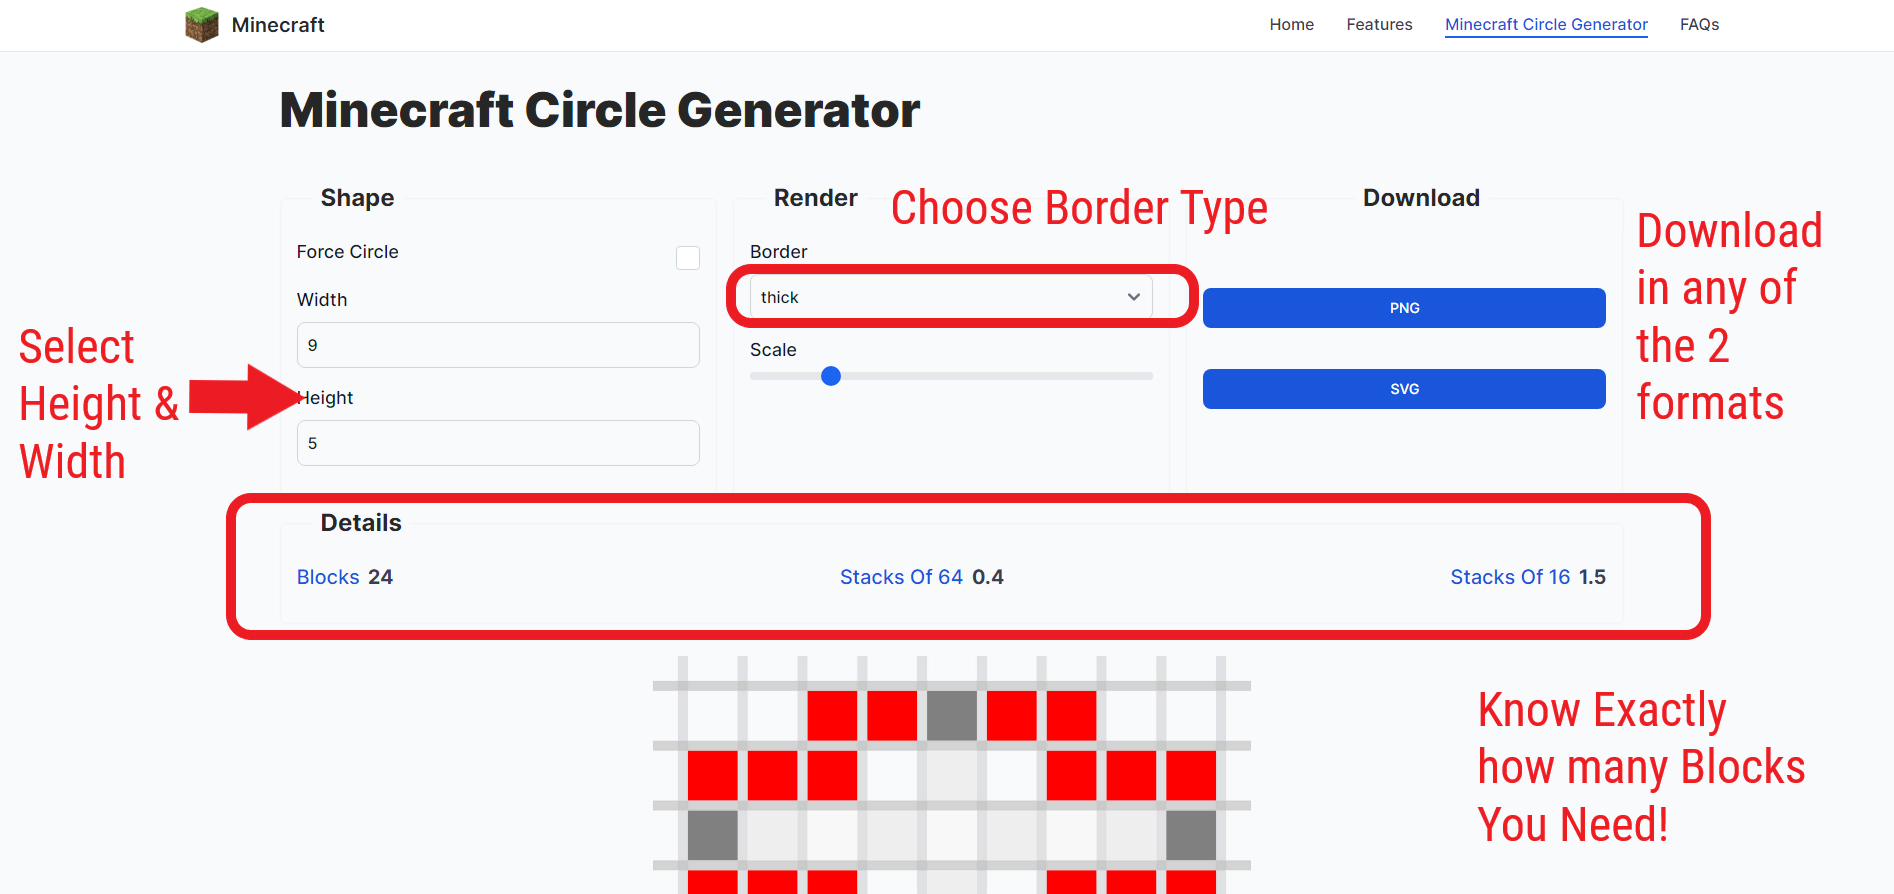 Minecraft Circle Generator Interface